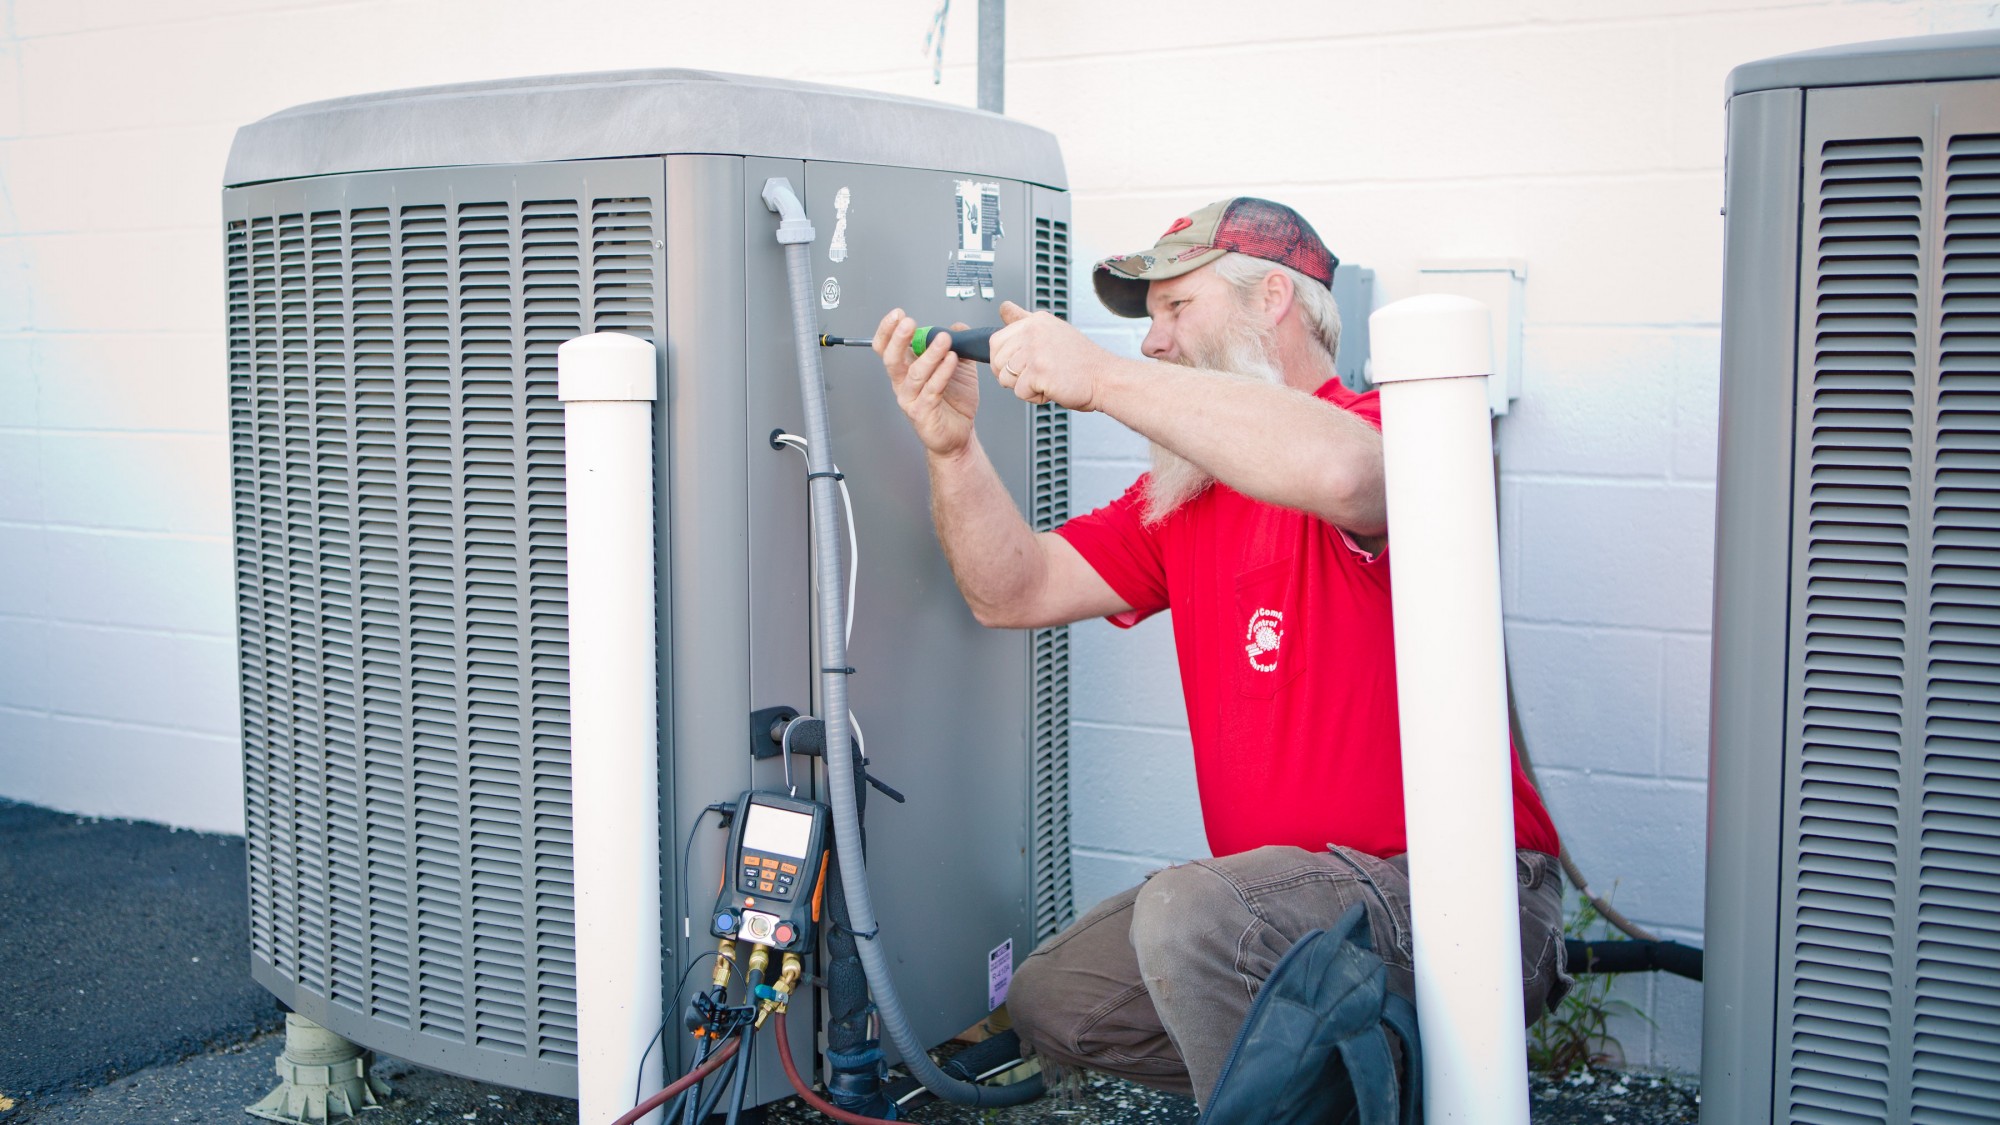 HVAC plumbing air conditioning ventilation heating maintenance with Ashland Comfort Control in Ashland, Ohio